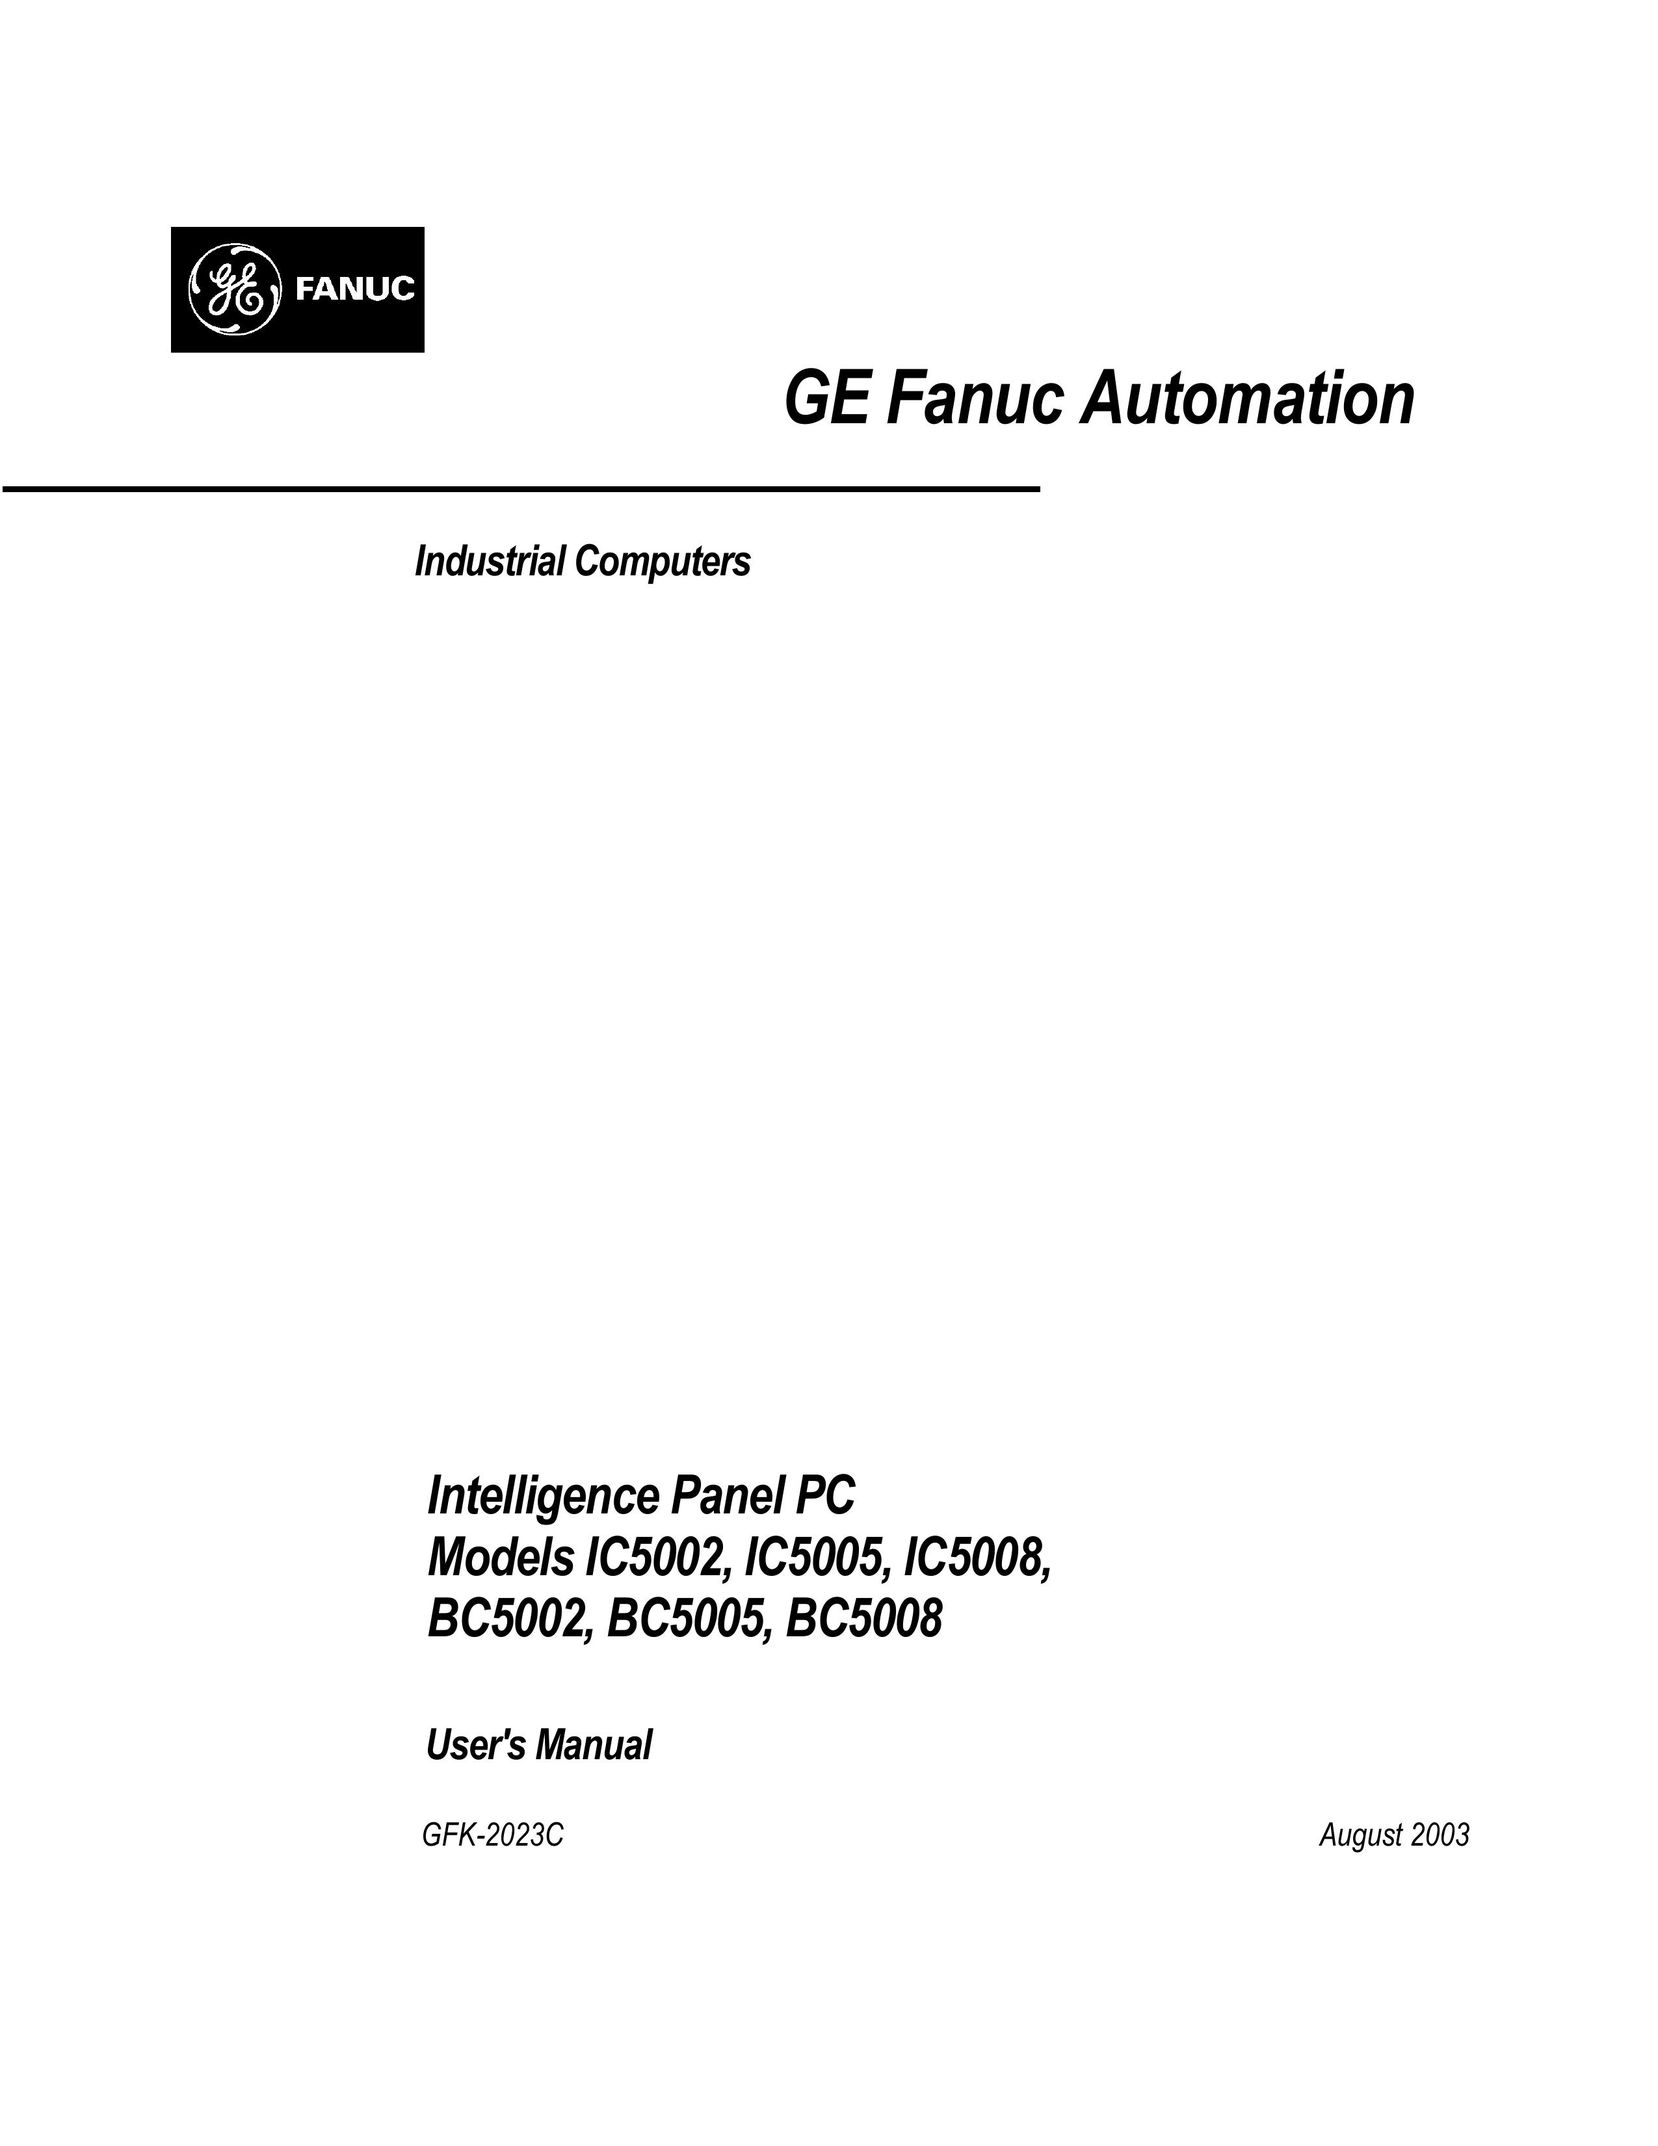 GE IC5005 Personal Computer User Manual